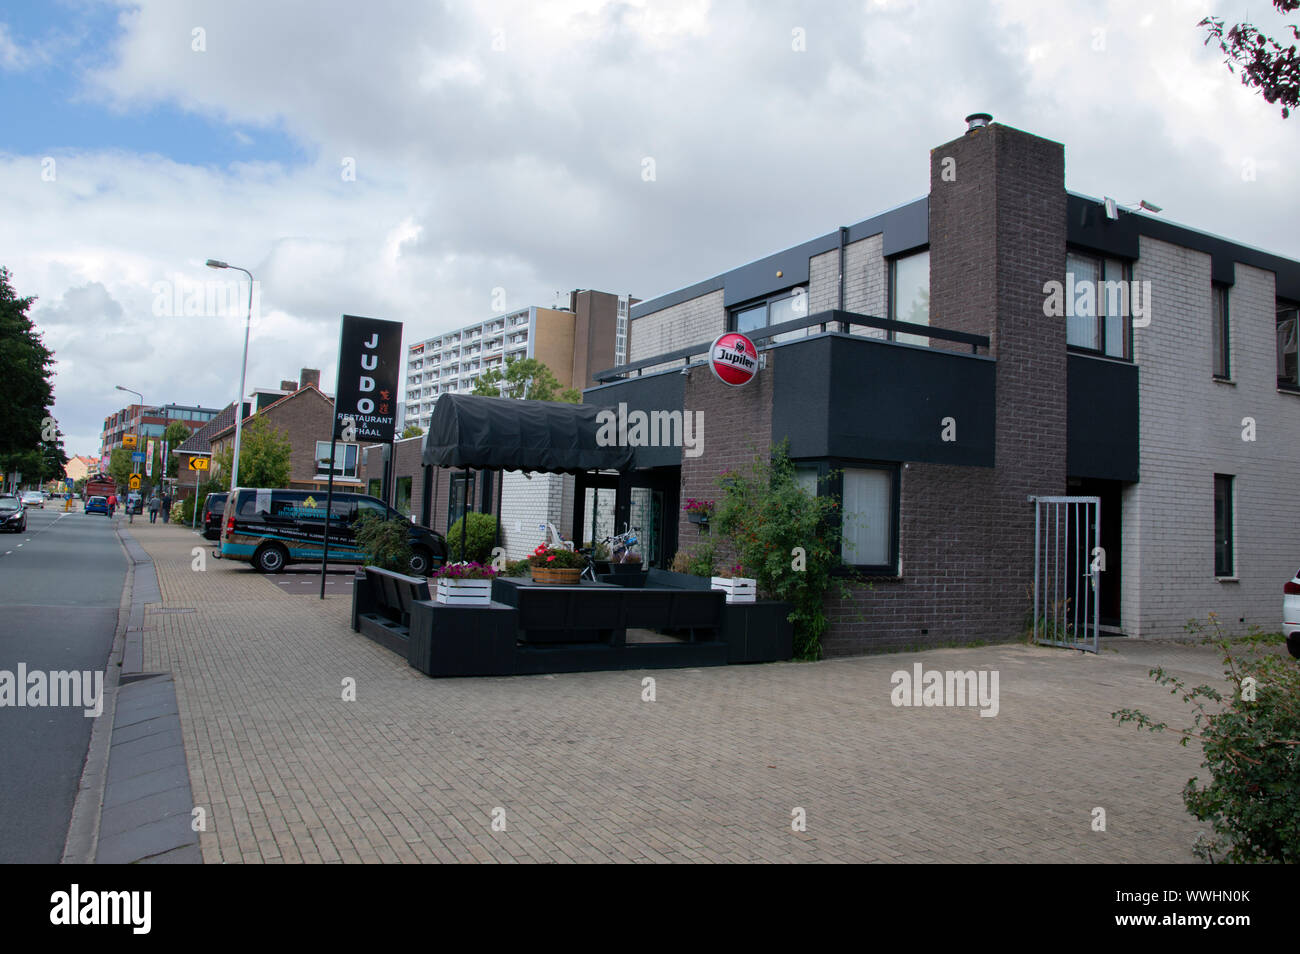 Restaurant Judo At Diemen The Netherlands 2019 Stock Photo